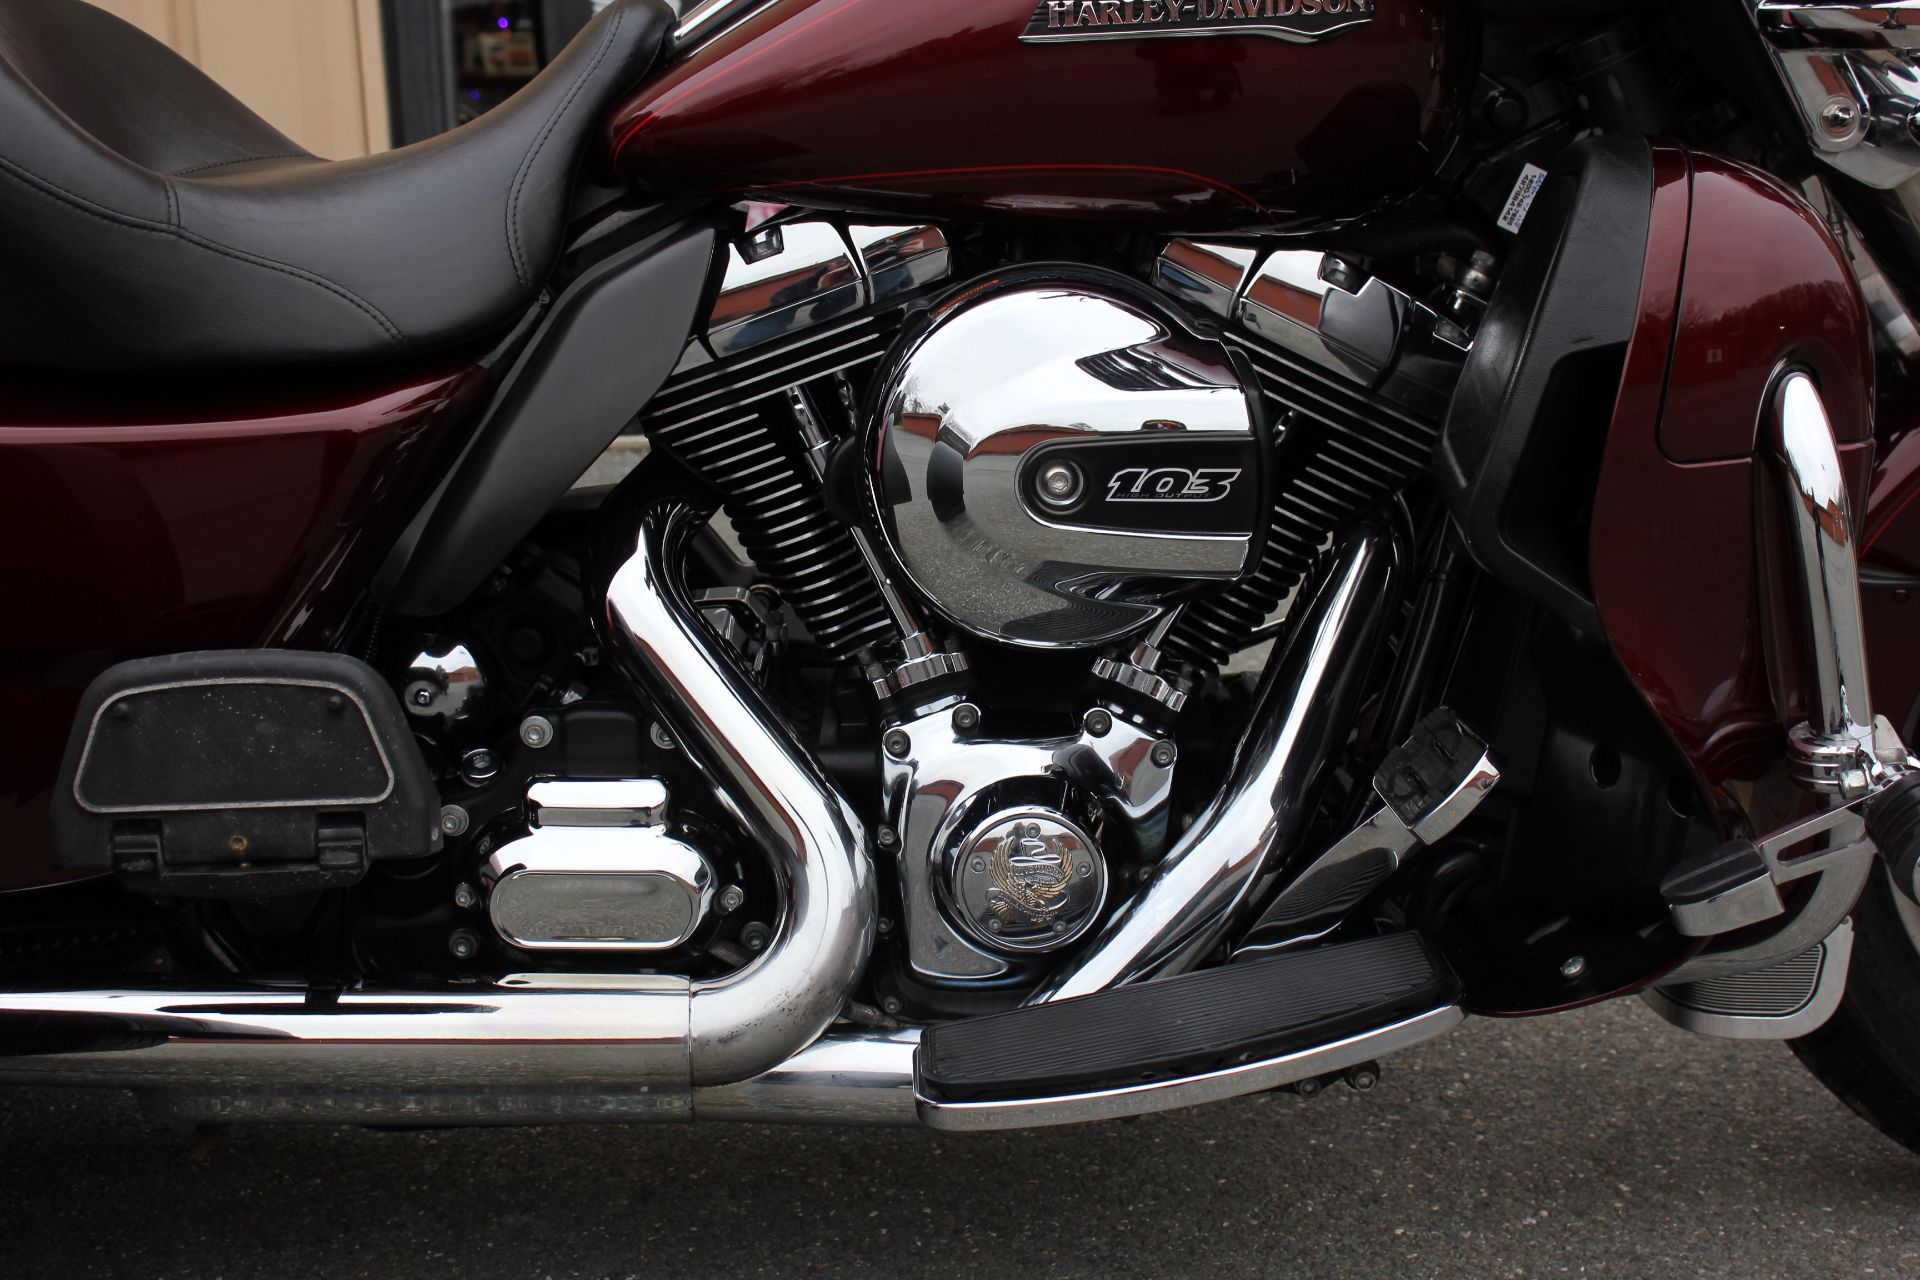 2015 Harley-Davidson Tri Glide® Ultra in Pittsfield, Massachusetts - Photo 14